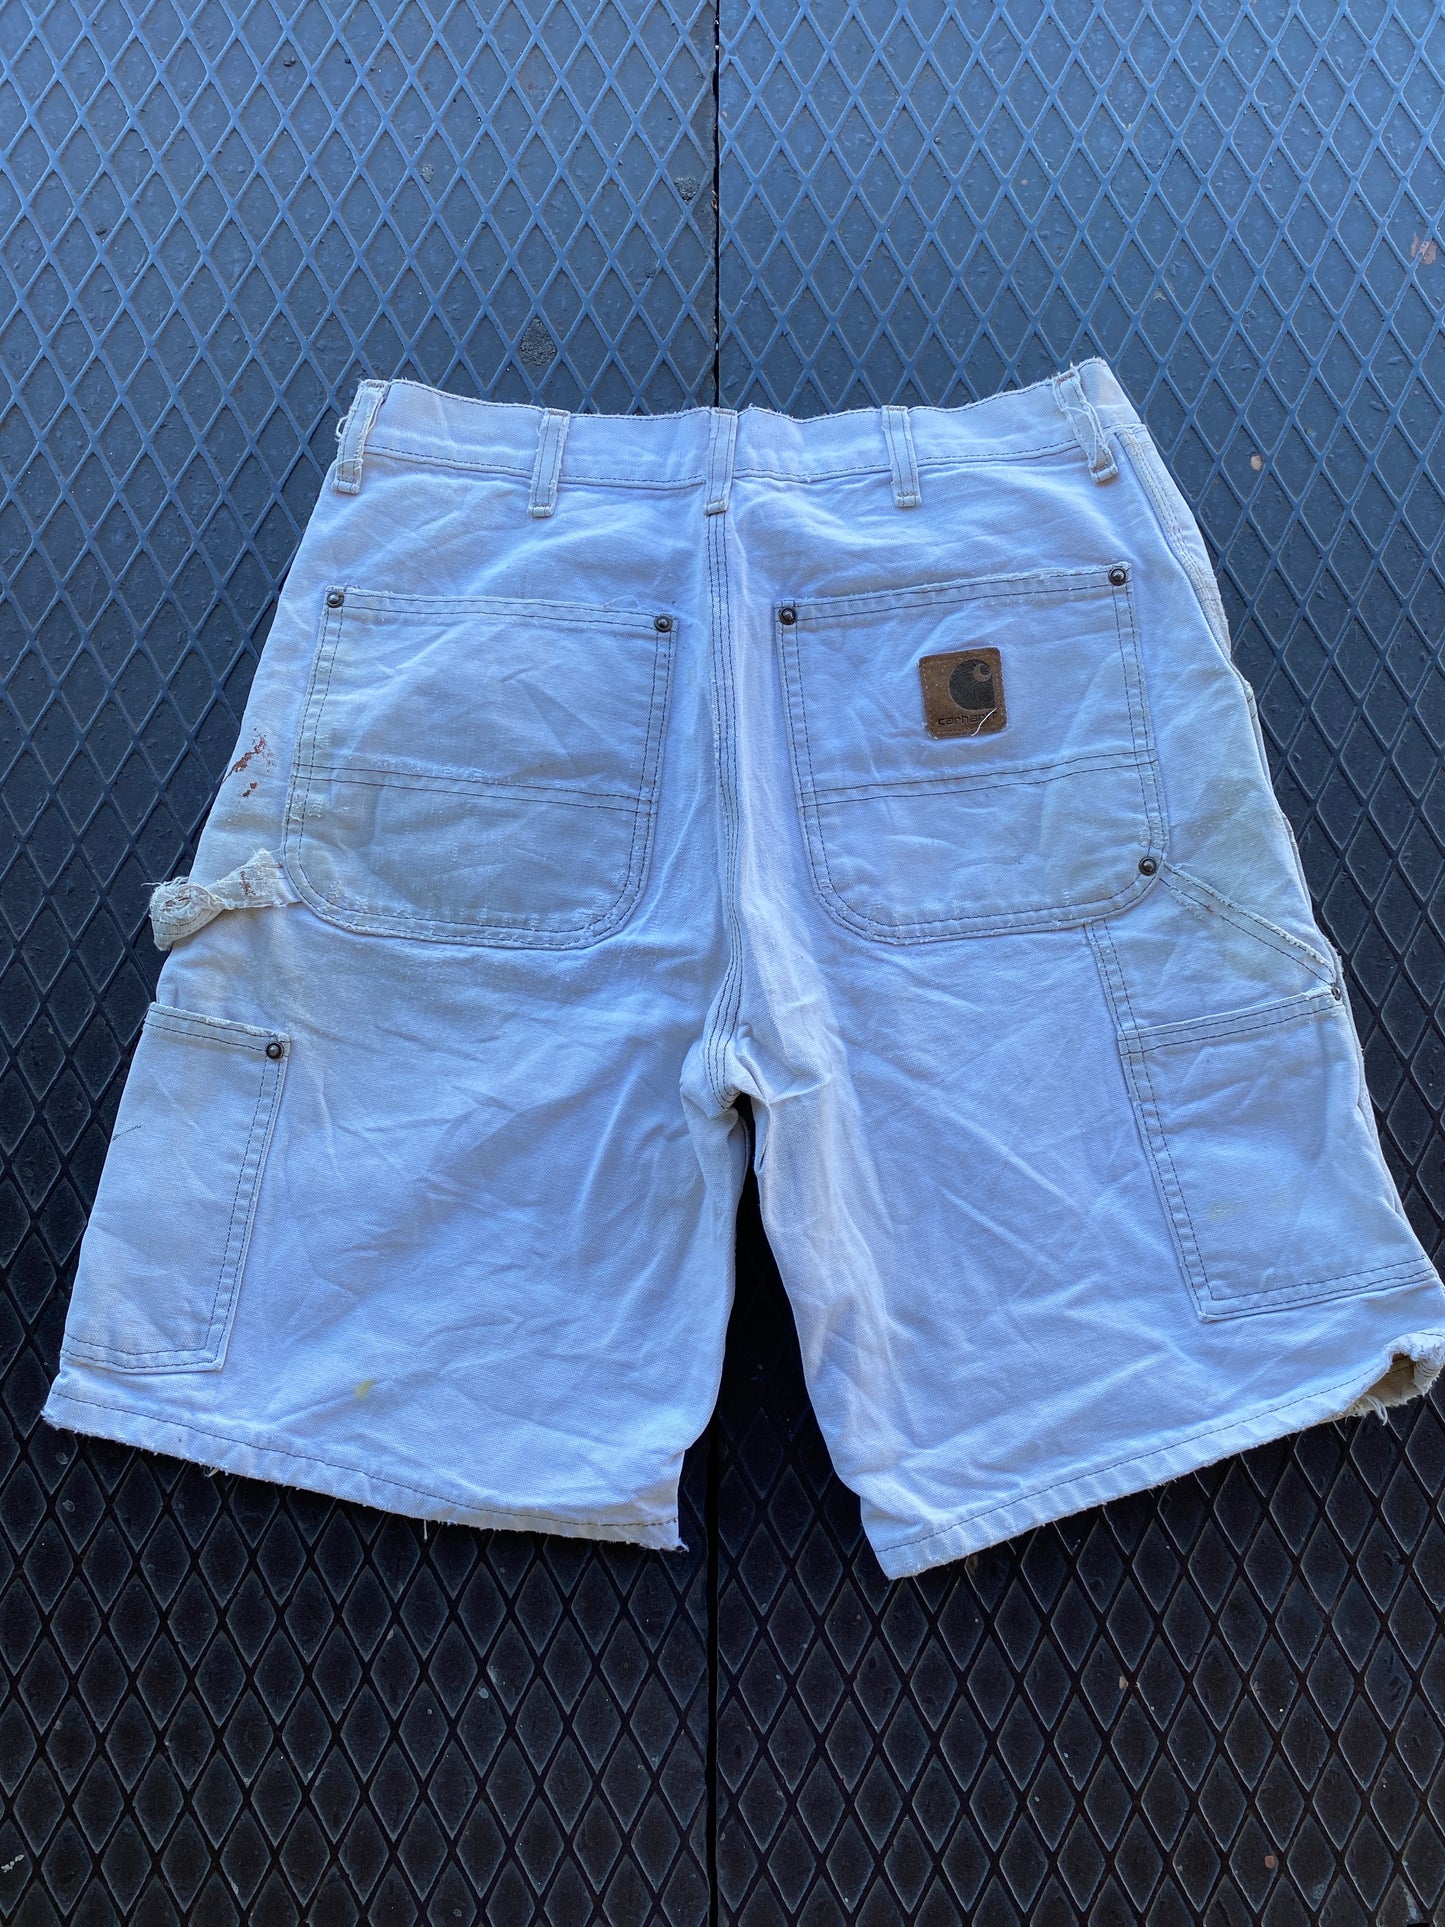 32 - Carhartt Double Knee Carpenter Shorts Distressed White/Beige